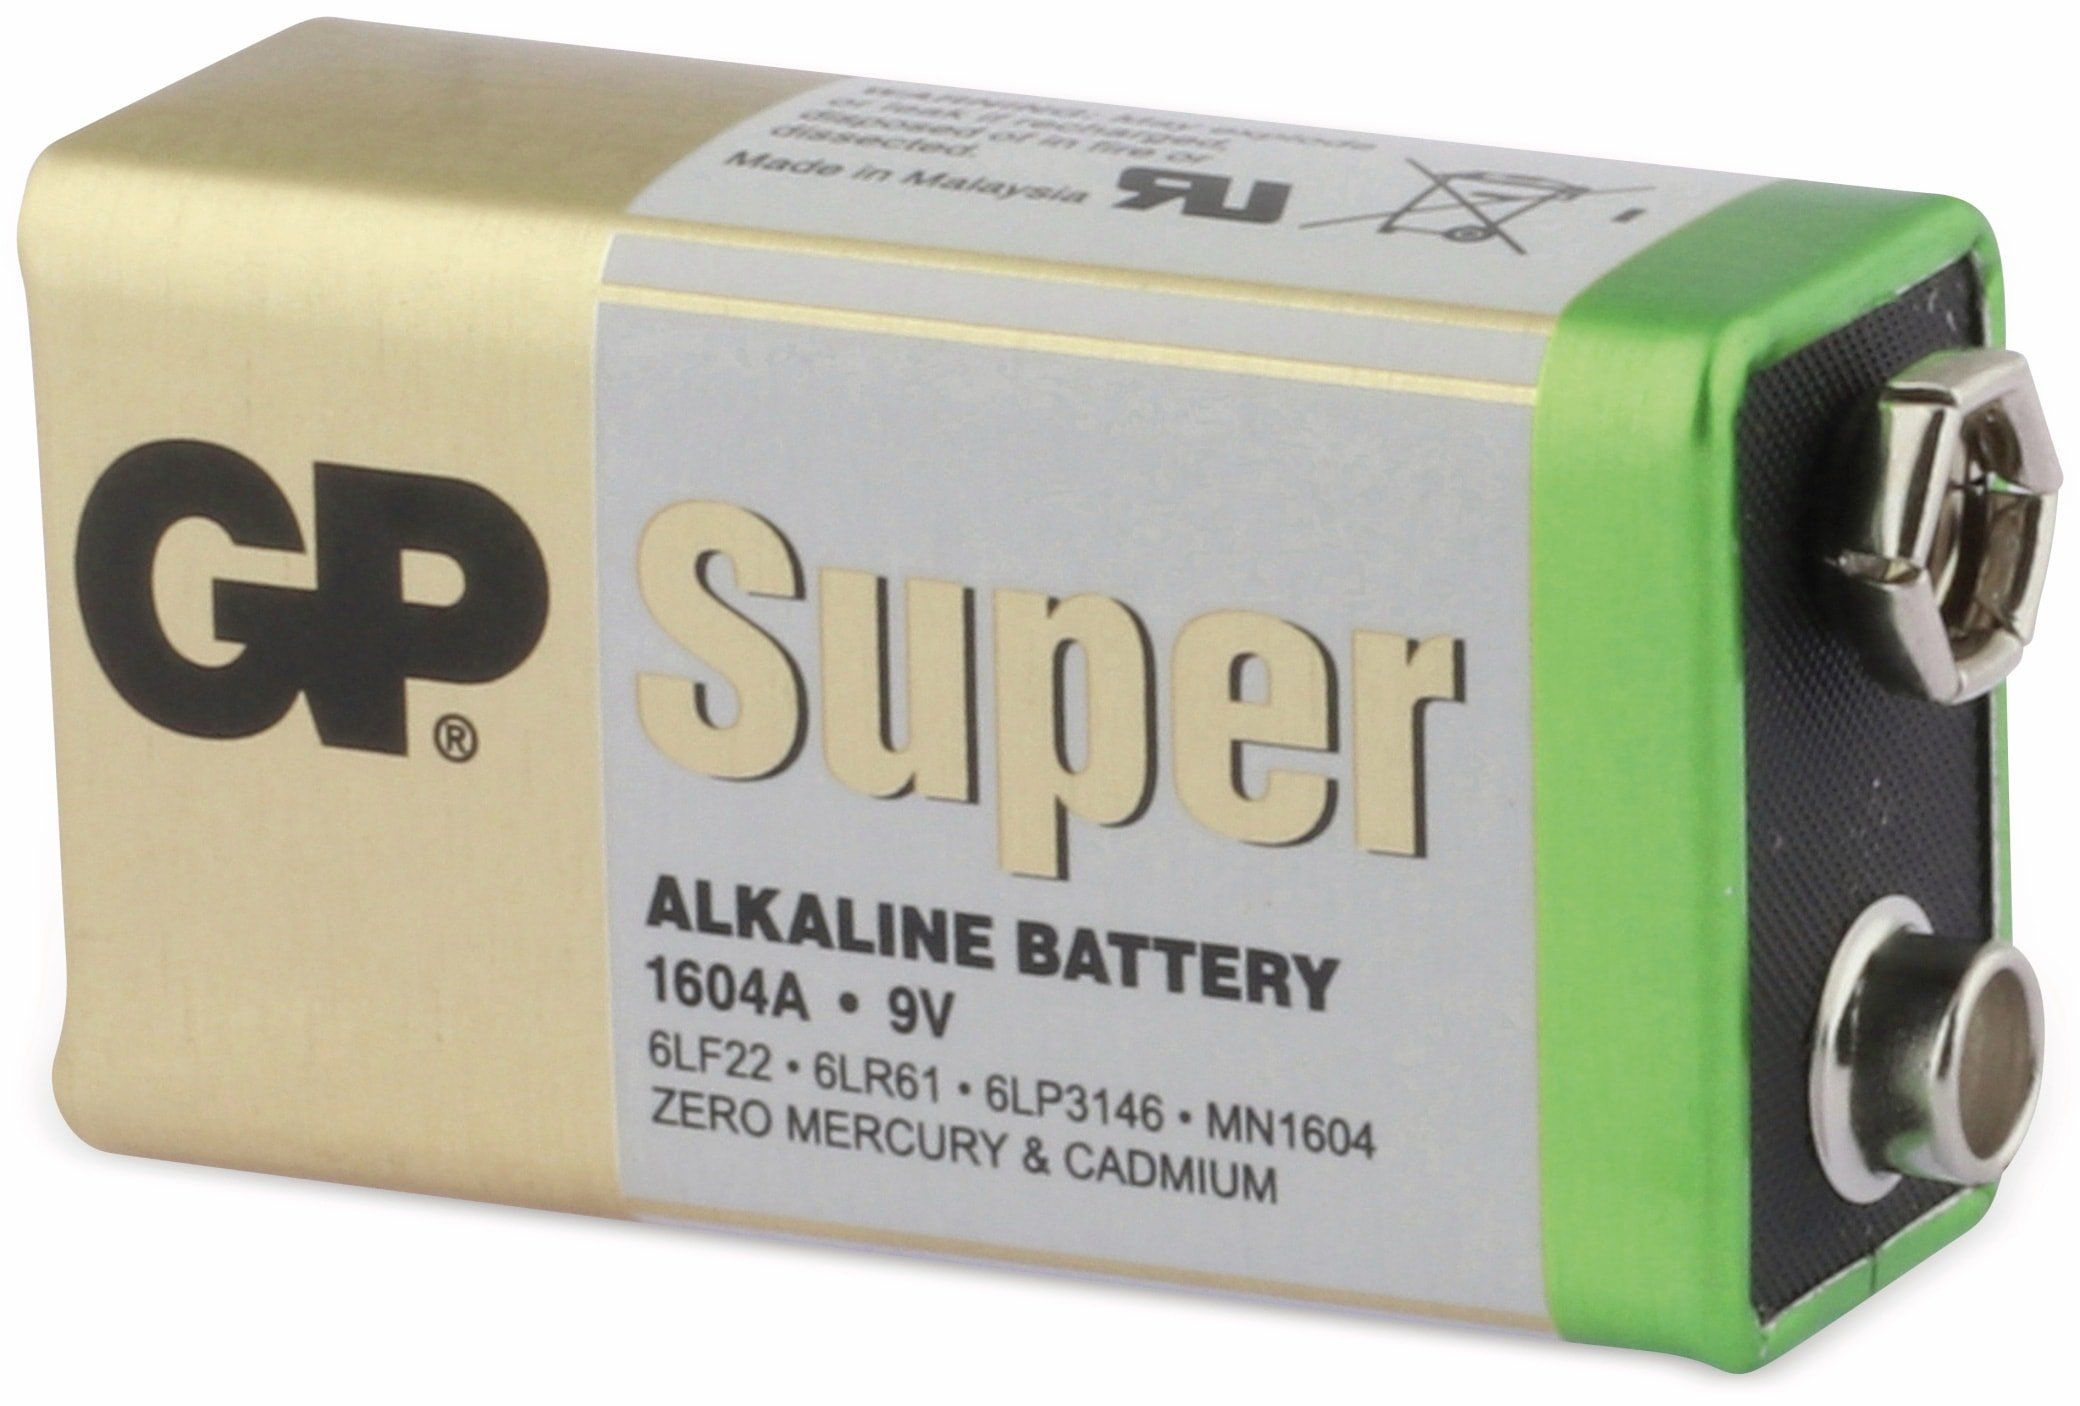 GP 9V-Block-Batterie-Set SUPER Alkaline Alkaline Stück 10 Batterieset